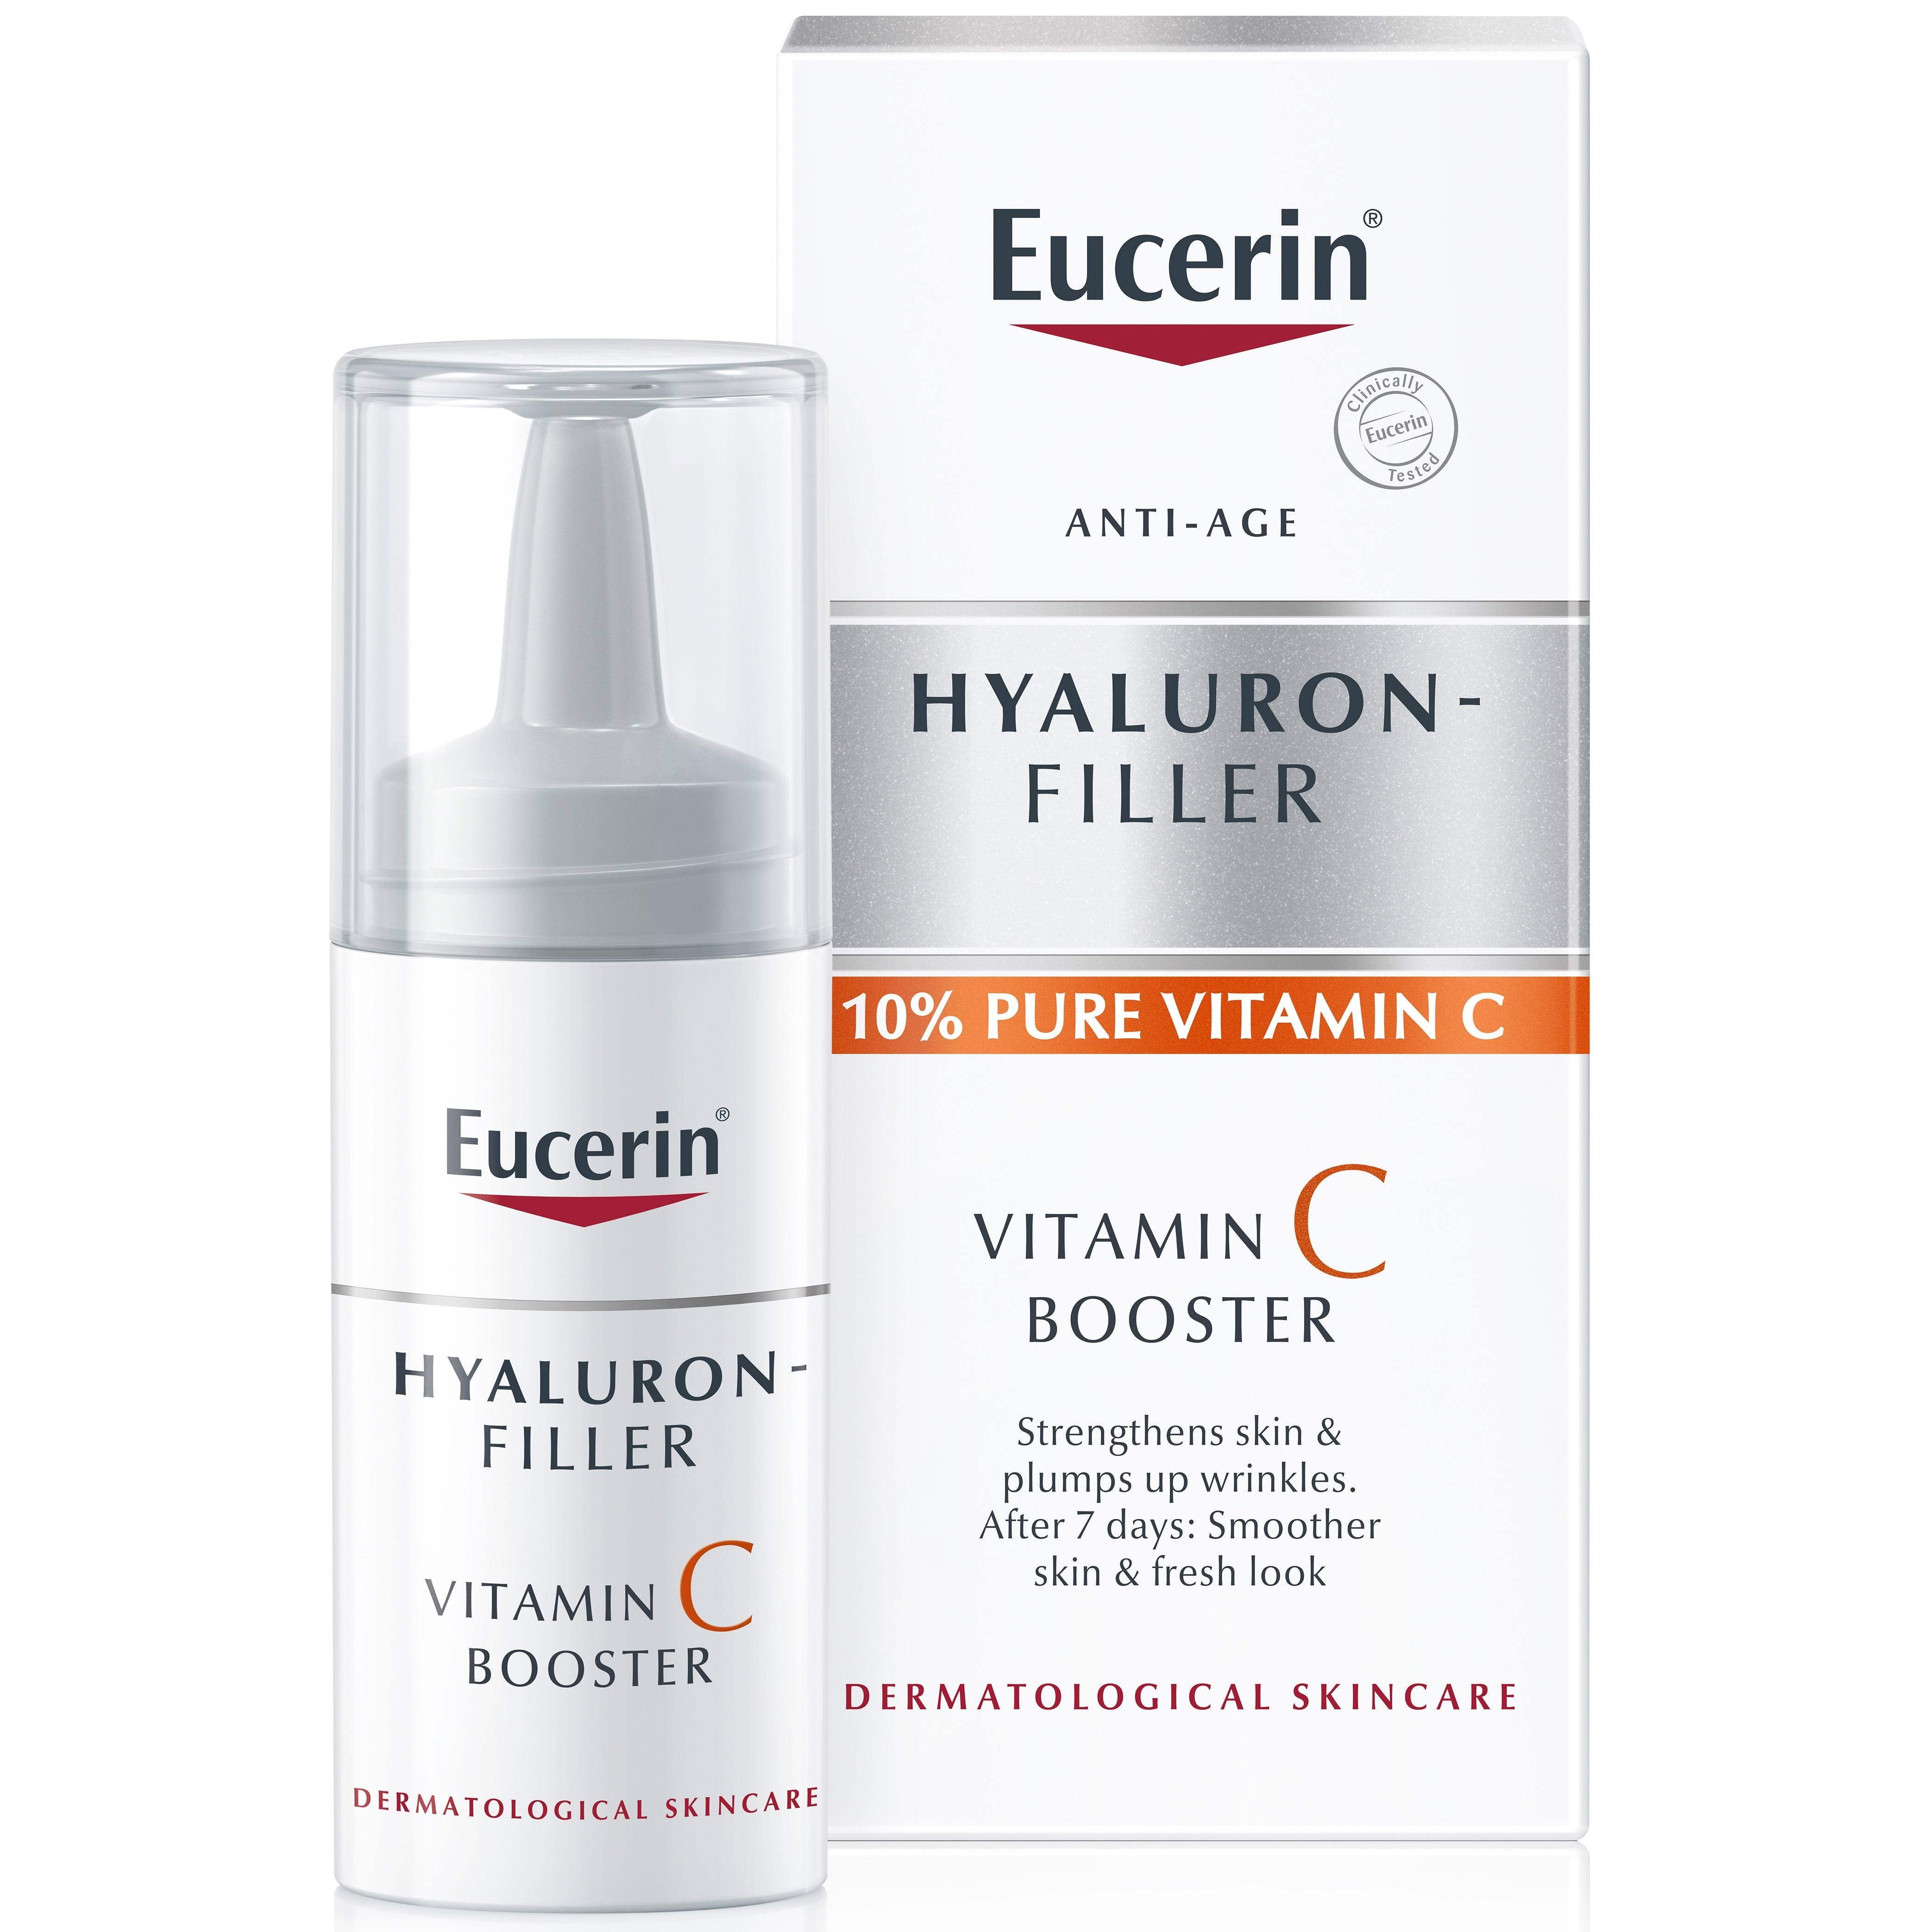 Eucerin Hyaluron- Filler Vitamin C Booster 8ml